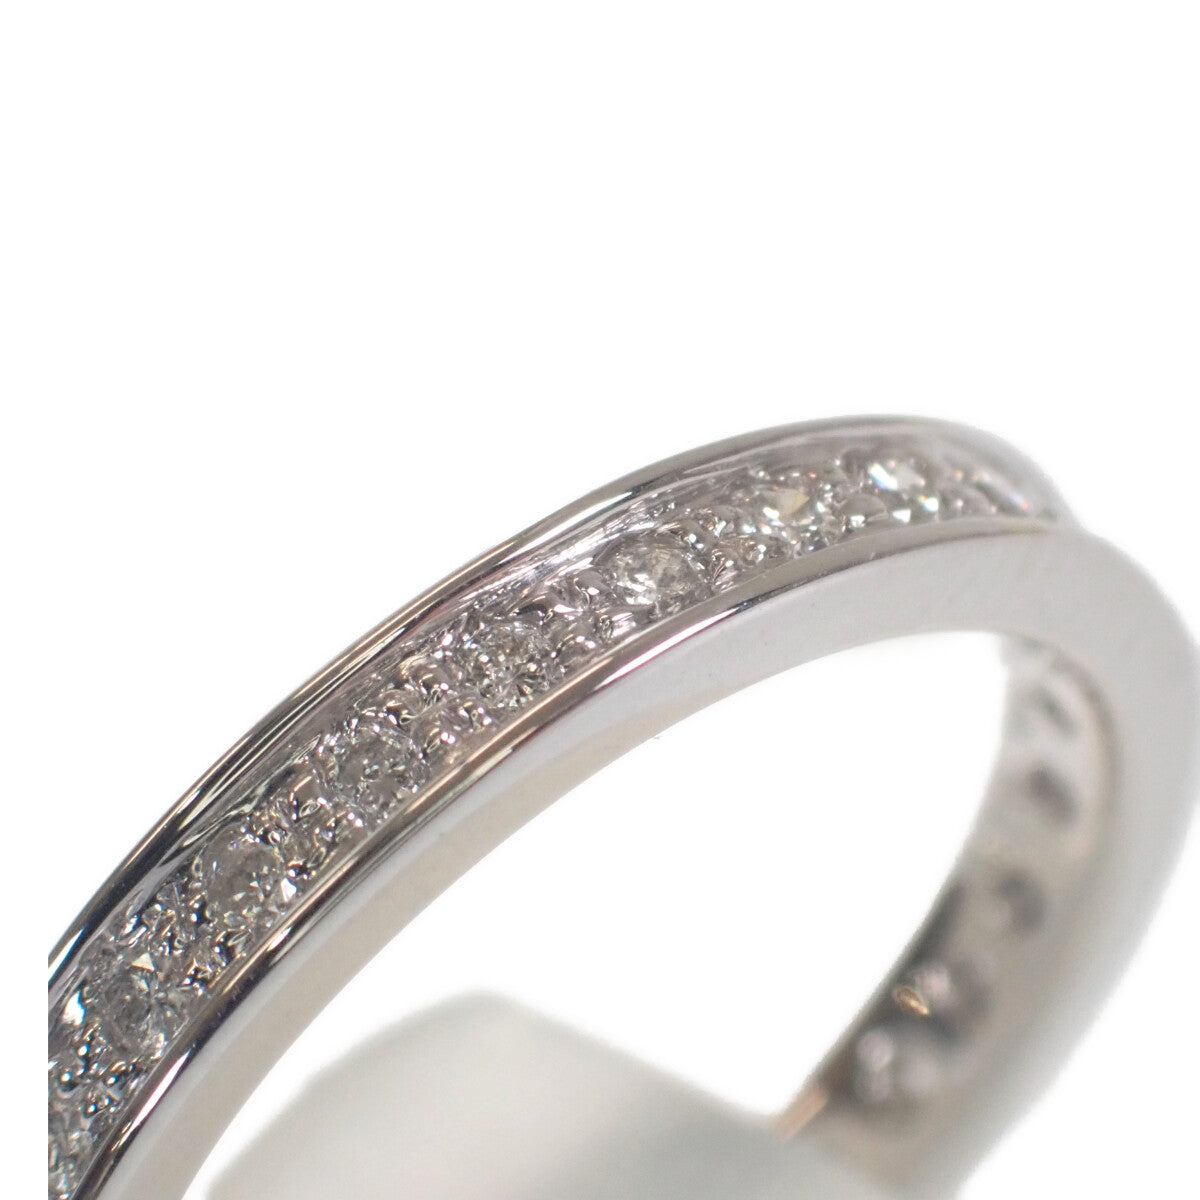 Full Eternity Design K18 White Gold Ring with 1.31ct Diamond, Size 14 (Silver, Women)